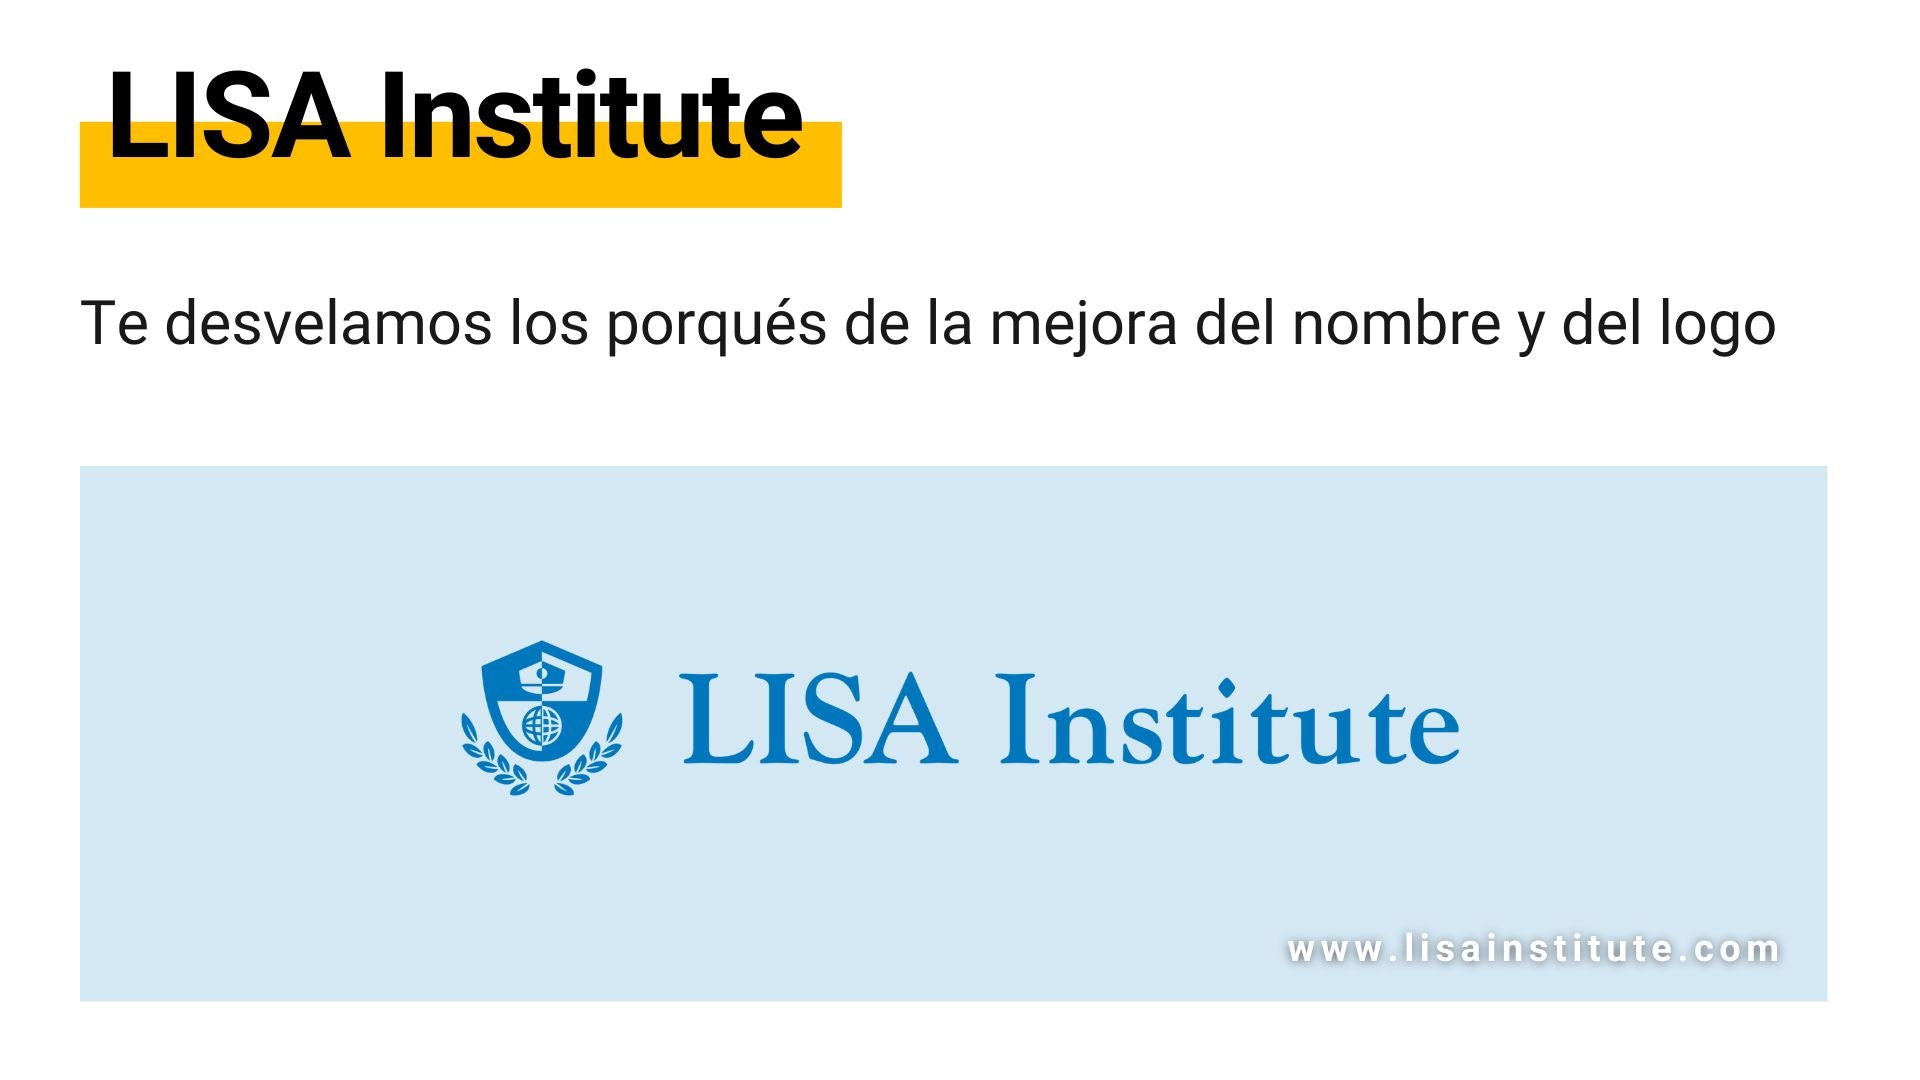 LISA Institute nombre y logo